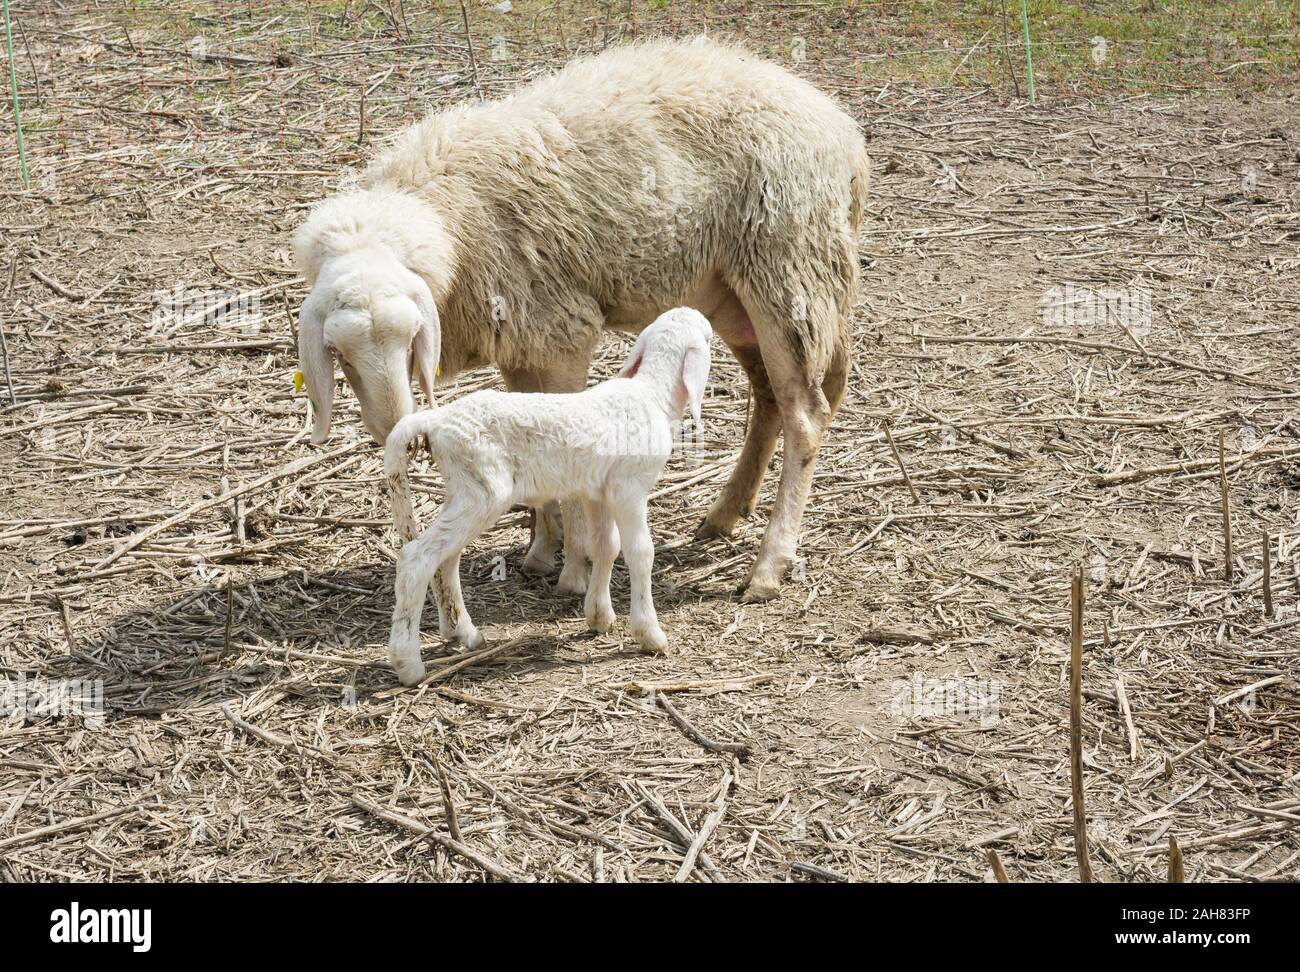 Madre oveja y su cordero en primavera, Trentino Alto Adige, norte de Italia. Oveja Madre De Cordero Foto de stock